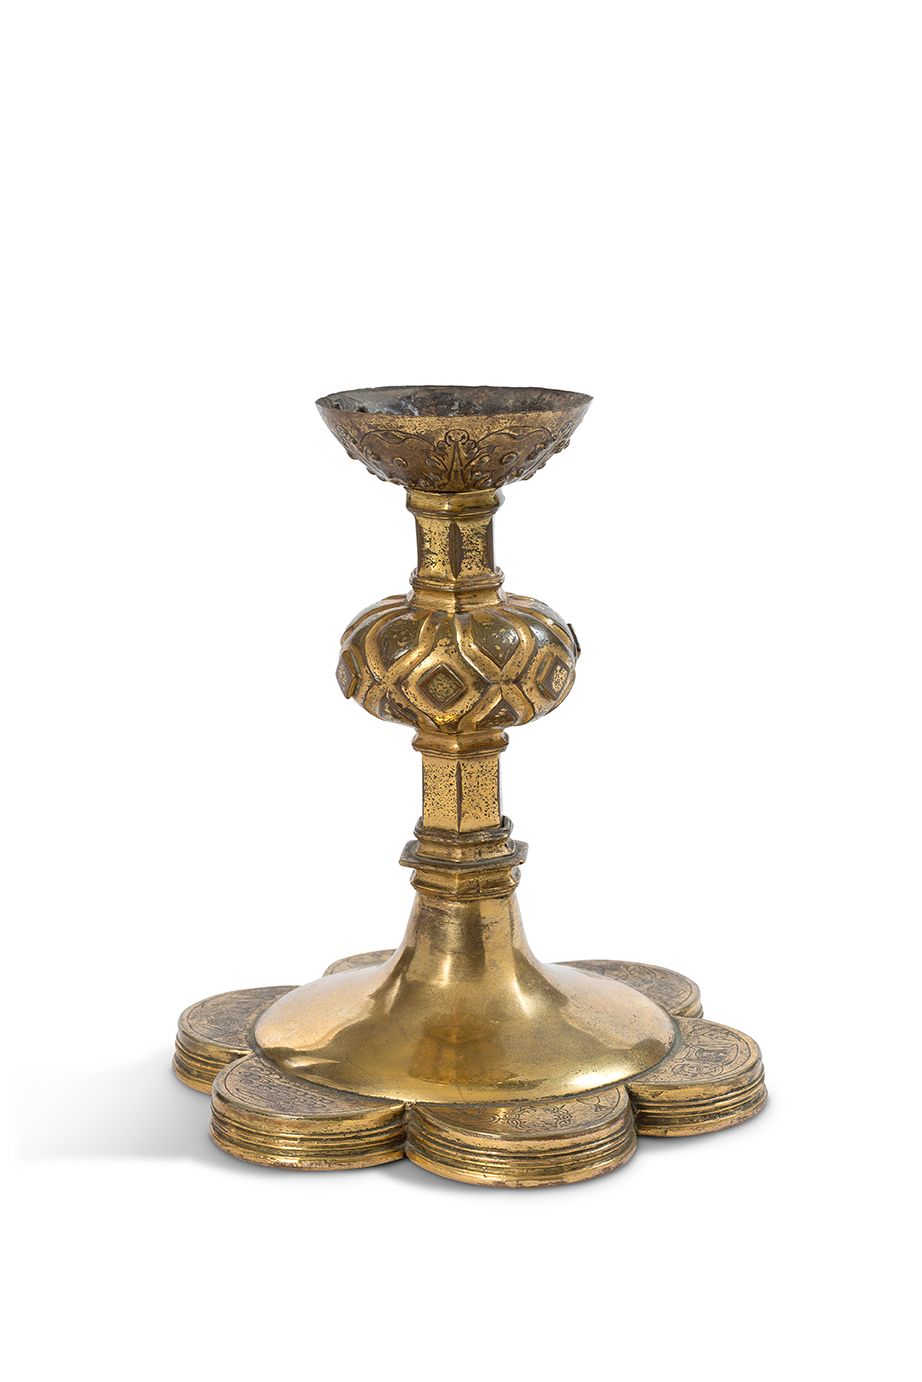 Null 一个雕刻和镀金的铜制CALICE PIED。六角形的茎上有一个中间的结，上面有凸圆形的宝石，多棱形的底座上装饰着受难的工具。
16世纪初
高17厘米